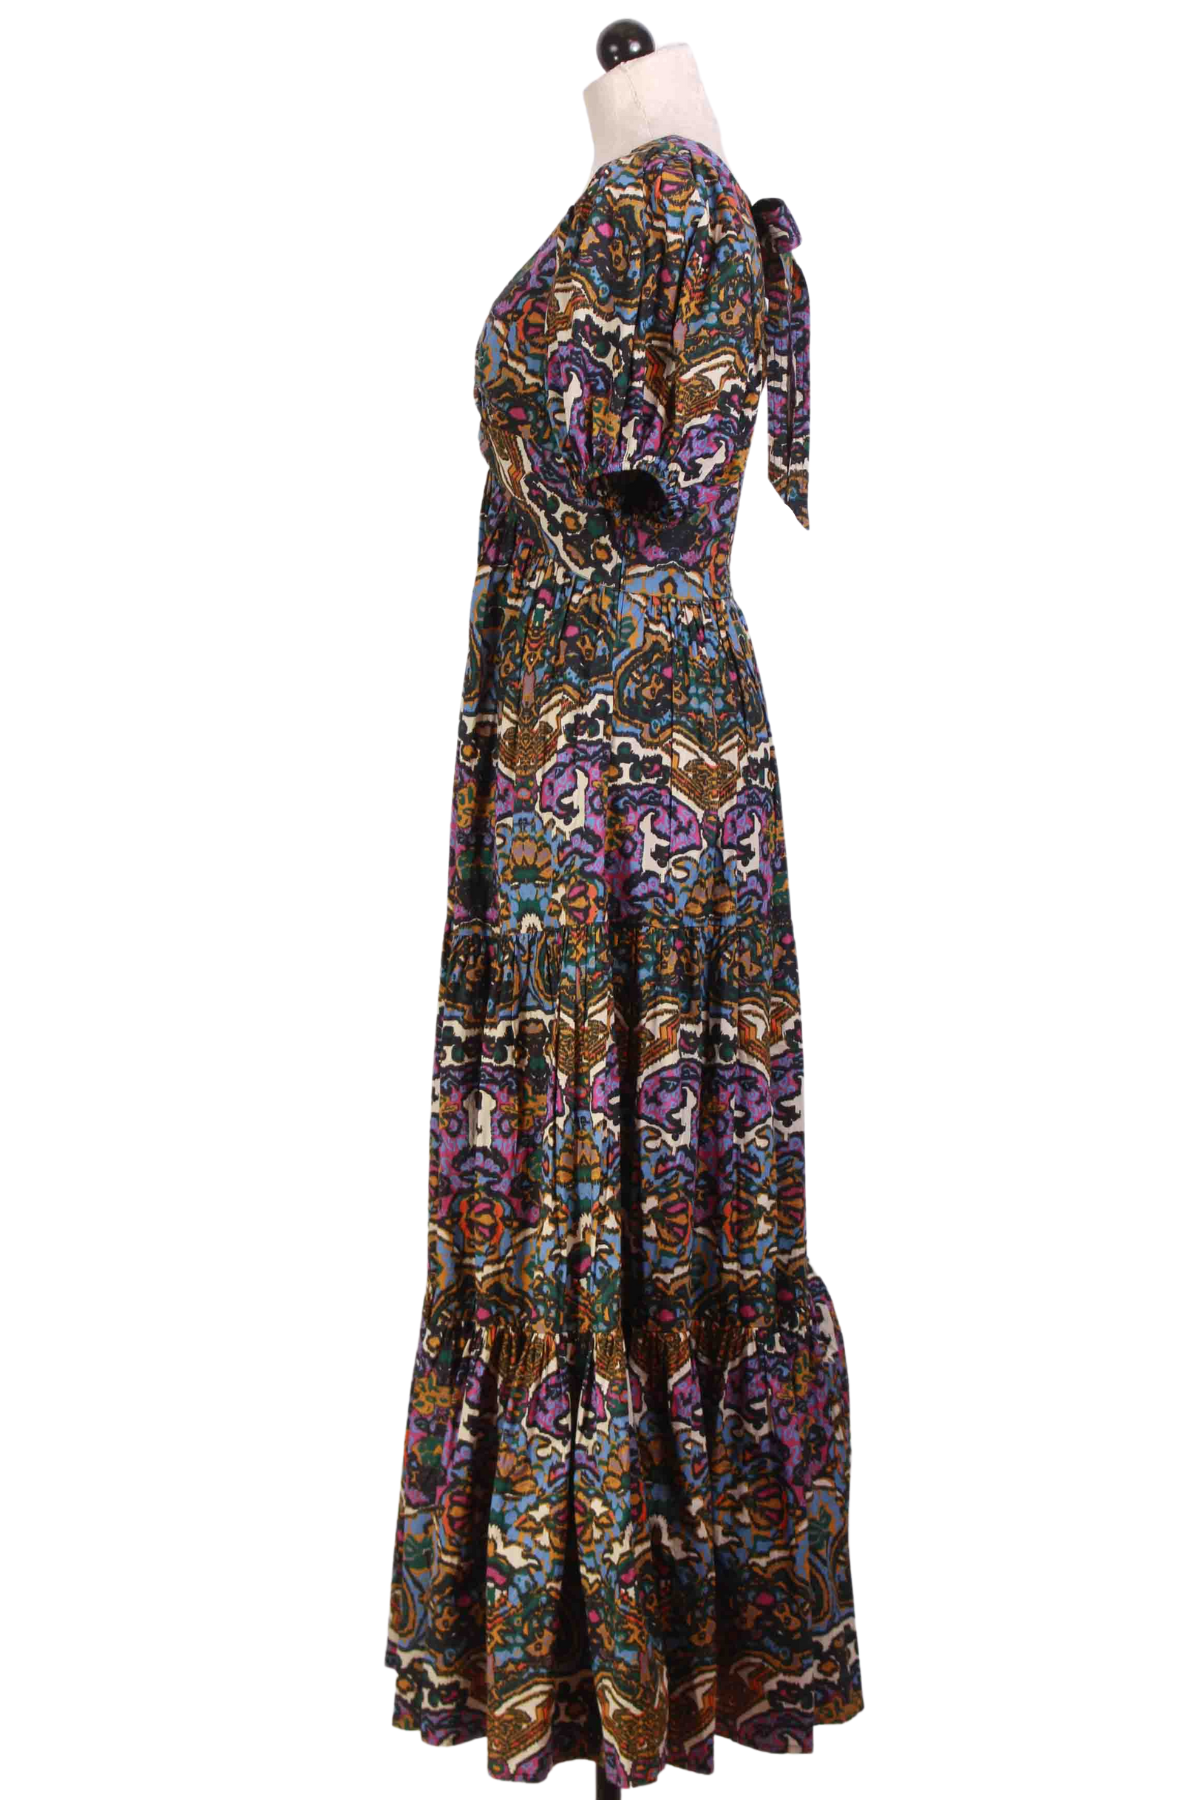 side view of Mosaic Ikat Midi Length Evita Dress by Cleobella